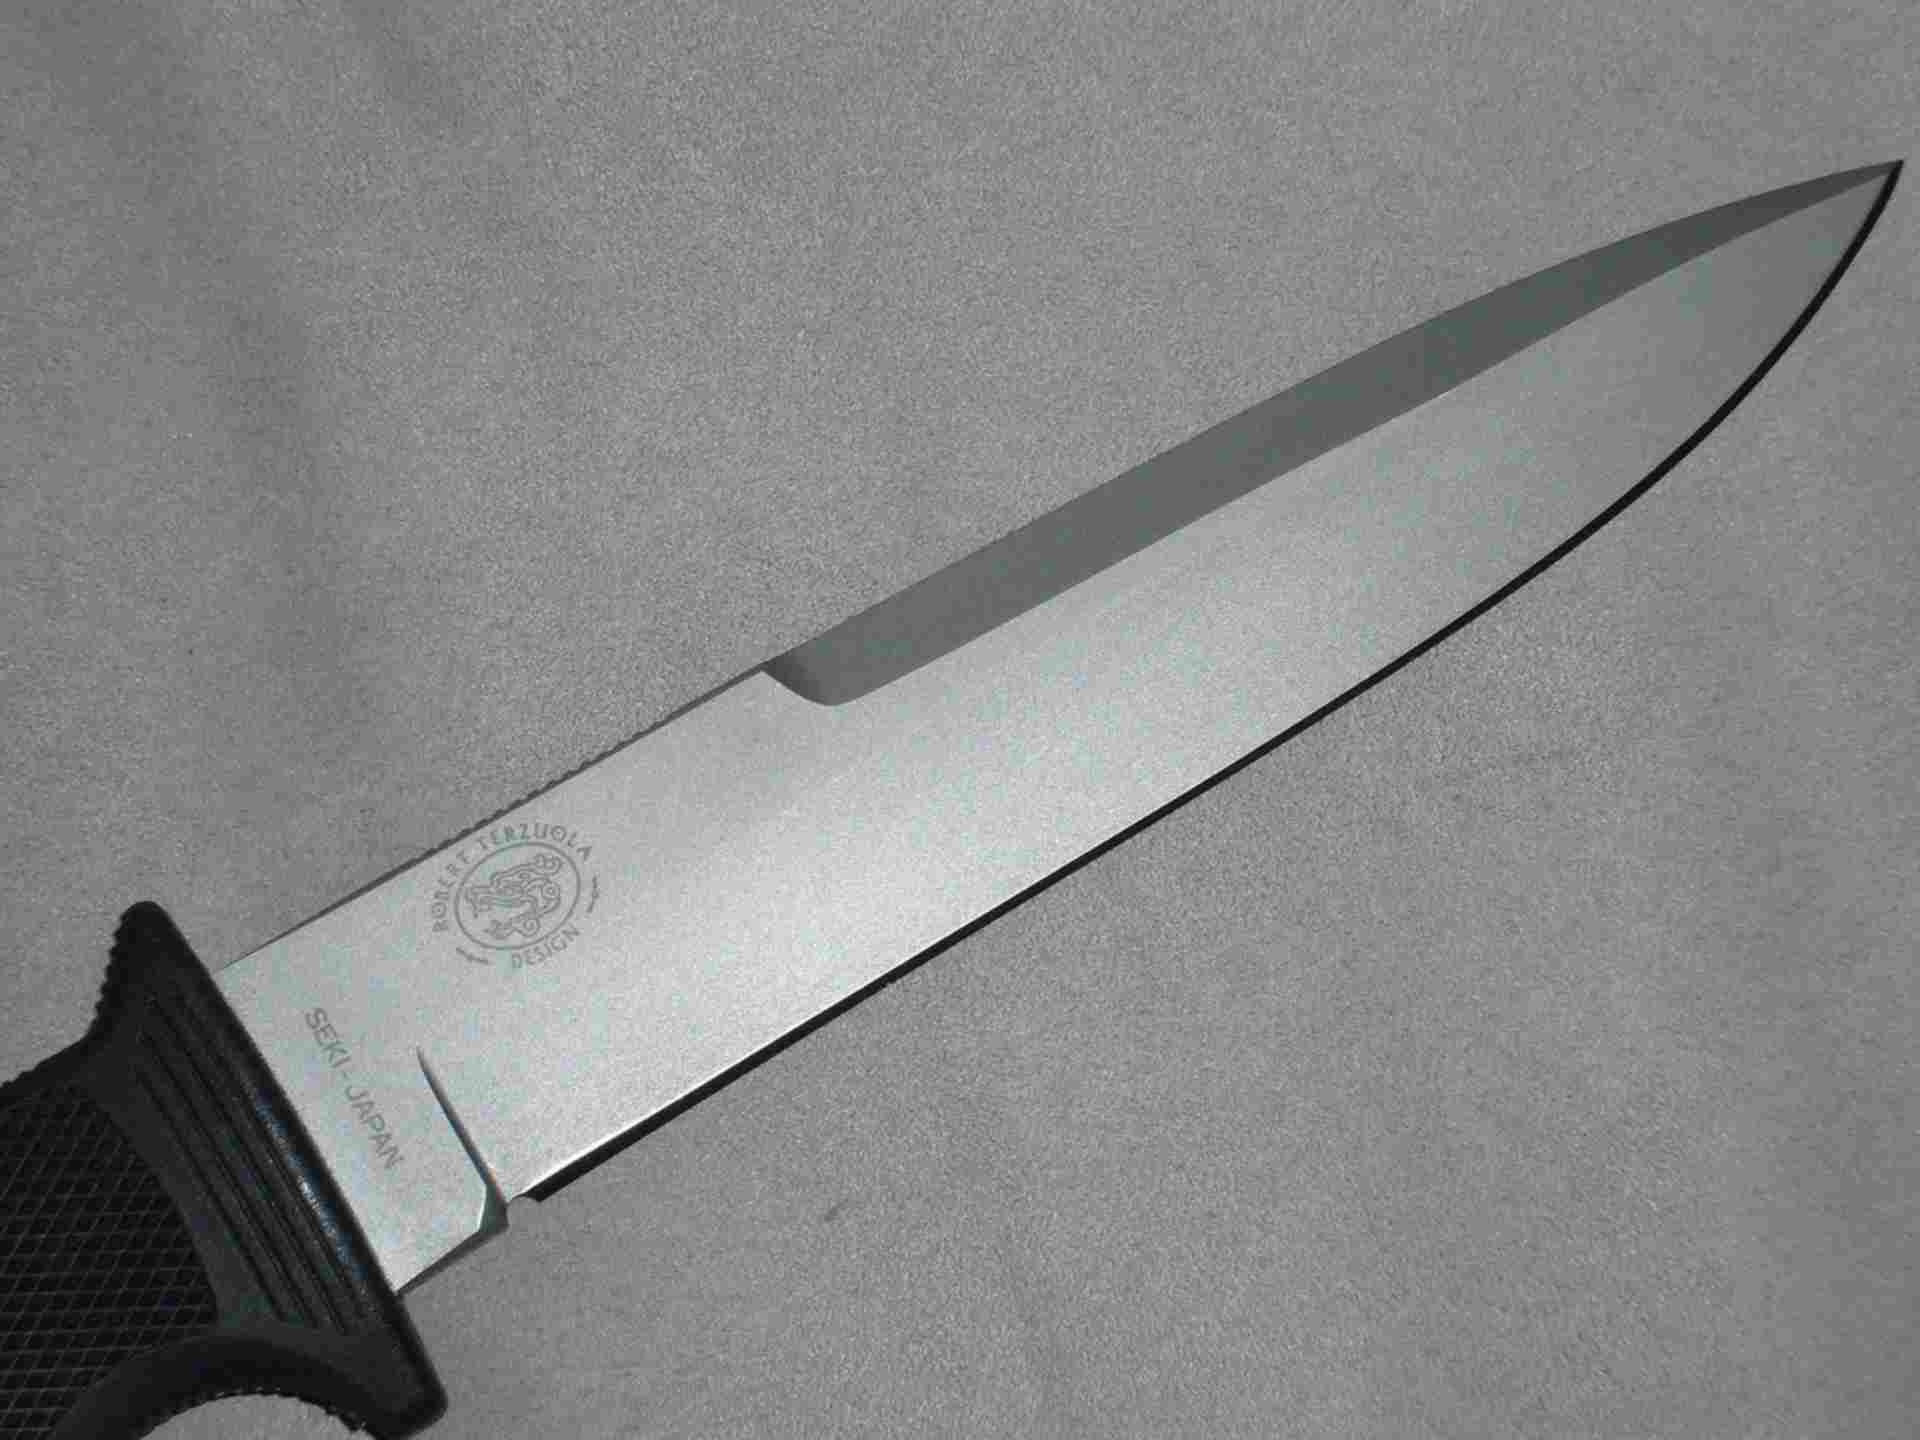 369 sonic нож купить. Нож комбат купить. Купить нож Тунгус. Нож Fallkniven a1 охотничий сталь vg10 рукоять Кратон купить.